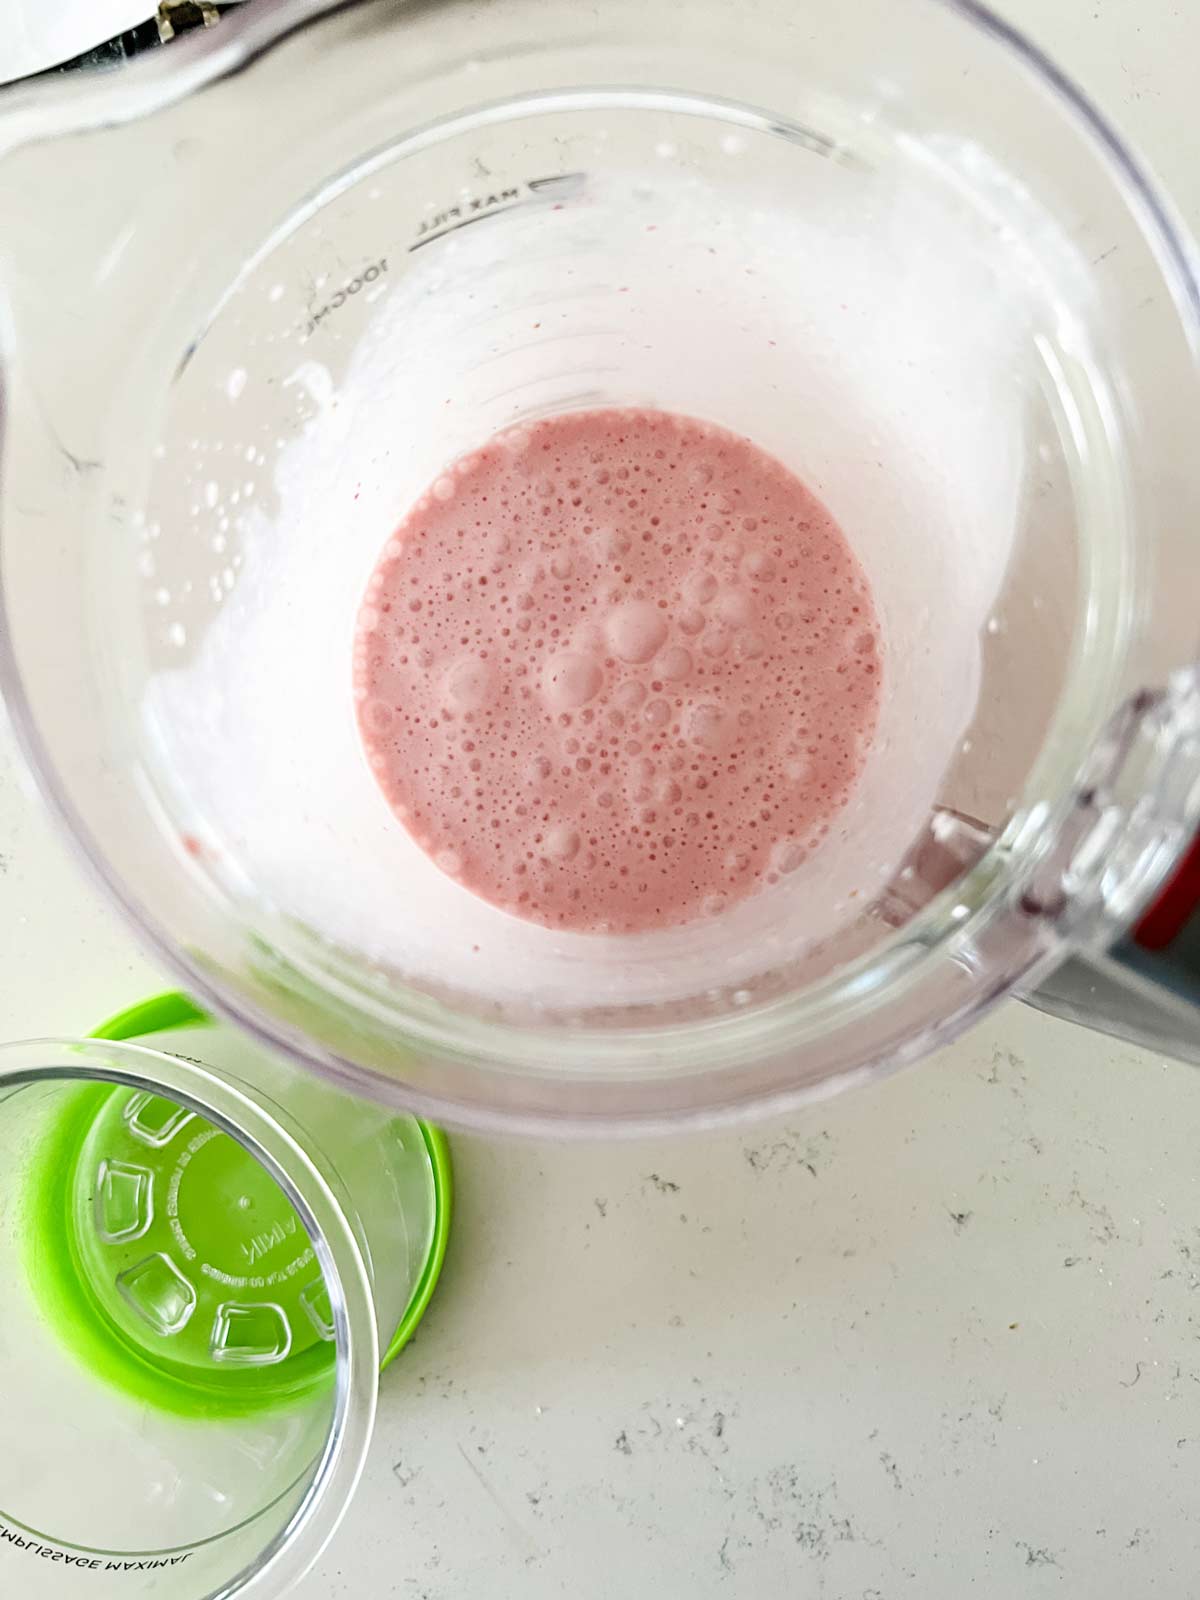 The blended base for strawberry ice cream in a blender.